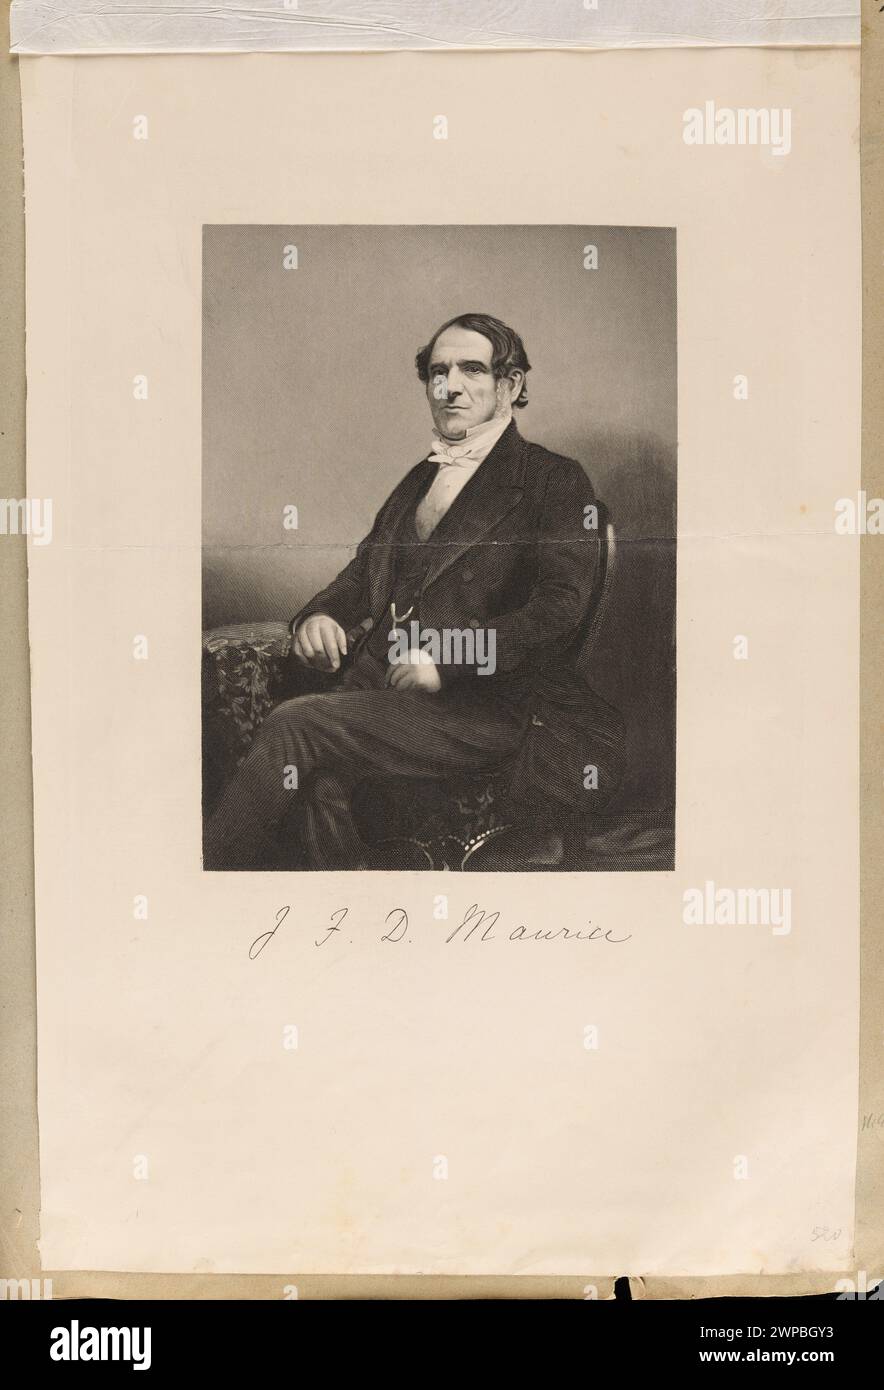 Portrait of Drederick Denison Maurice; Pound, Daniel John (Fl. Ca 1842-1870), Mayall, John Jabez Edwin (1813-1901), London Joint Stock NewsPaper Co. (London; Publisher; Fl. Ca 1858-186.); 1862 (1862-00-00-1862-00-00); Stock Photo